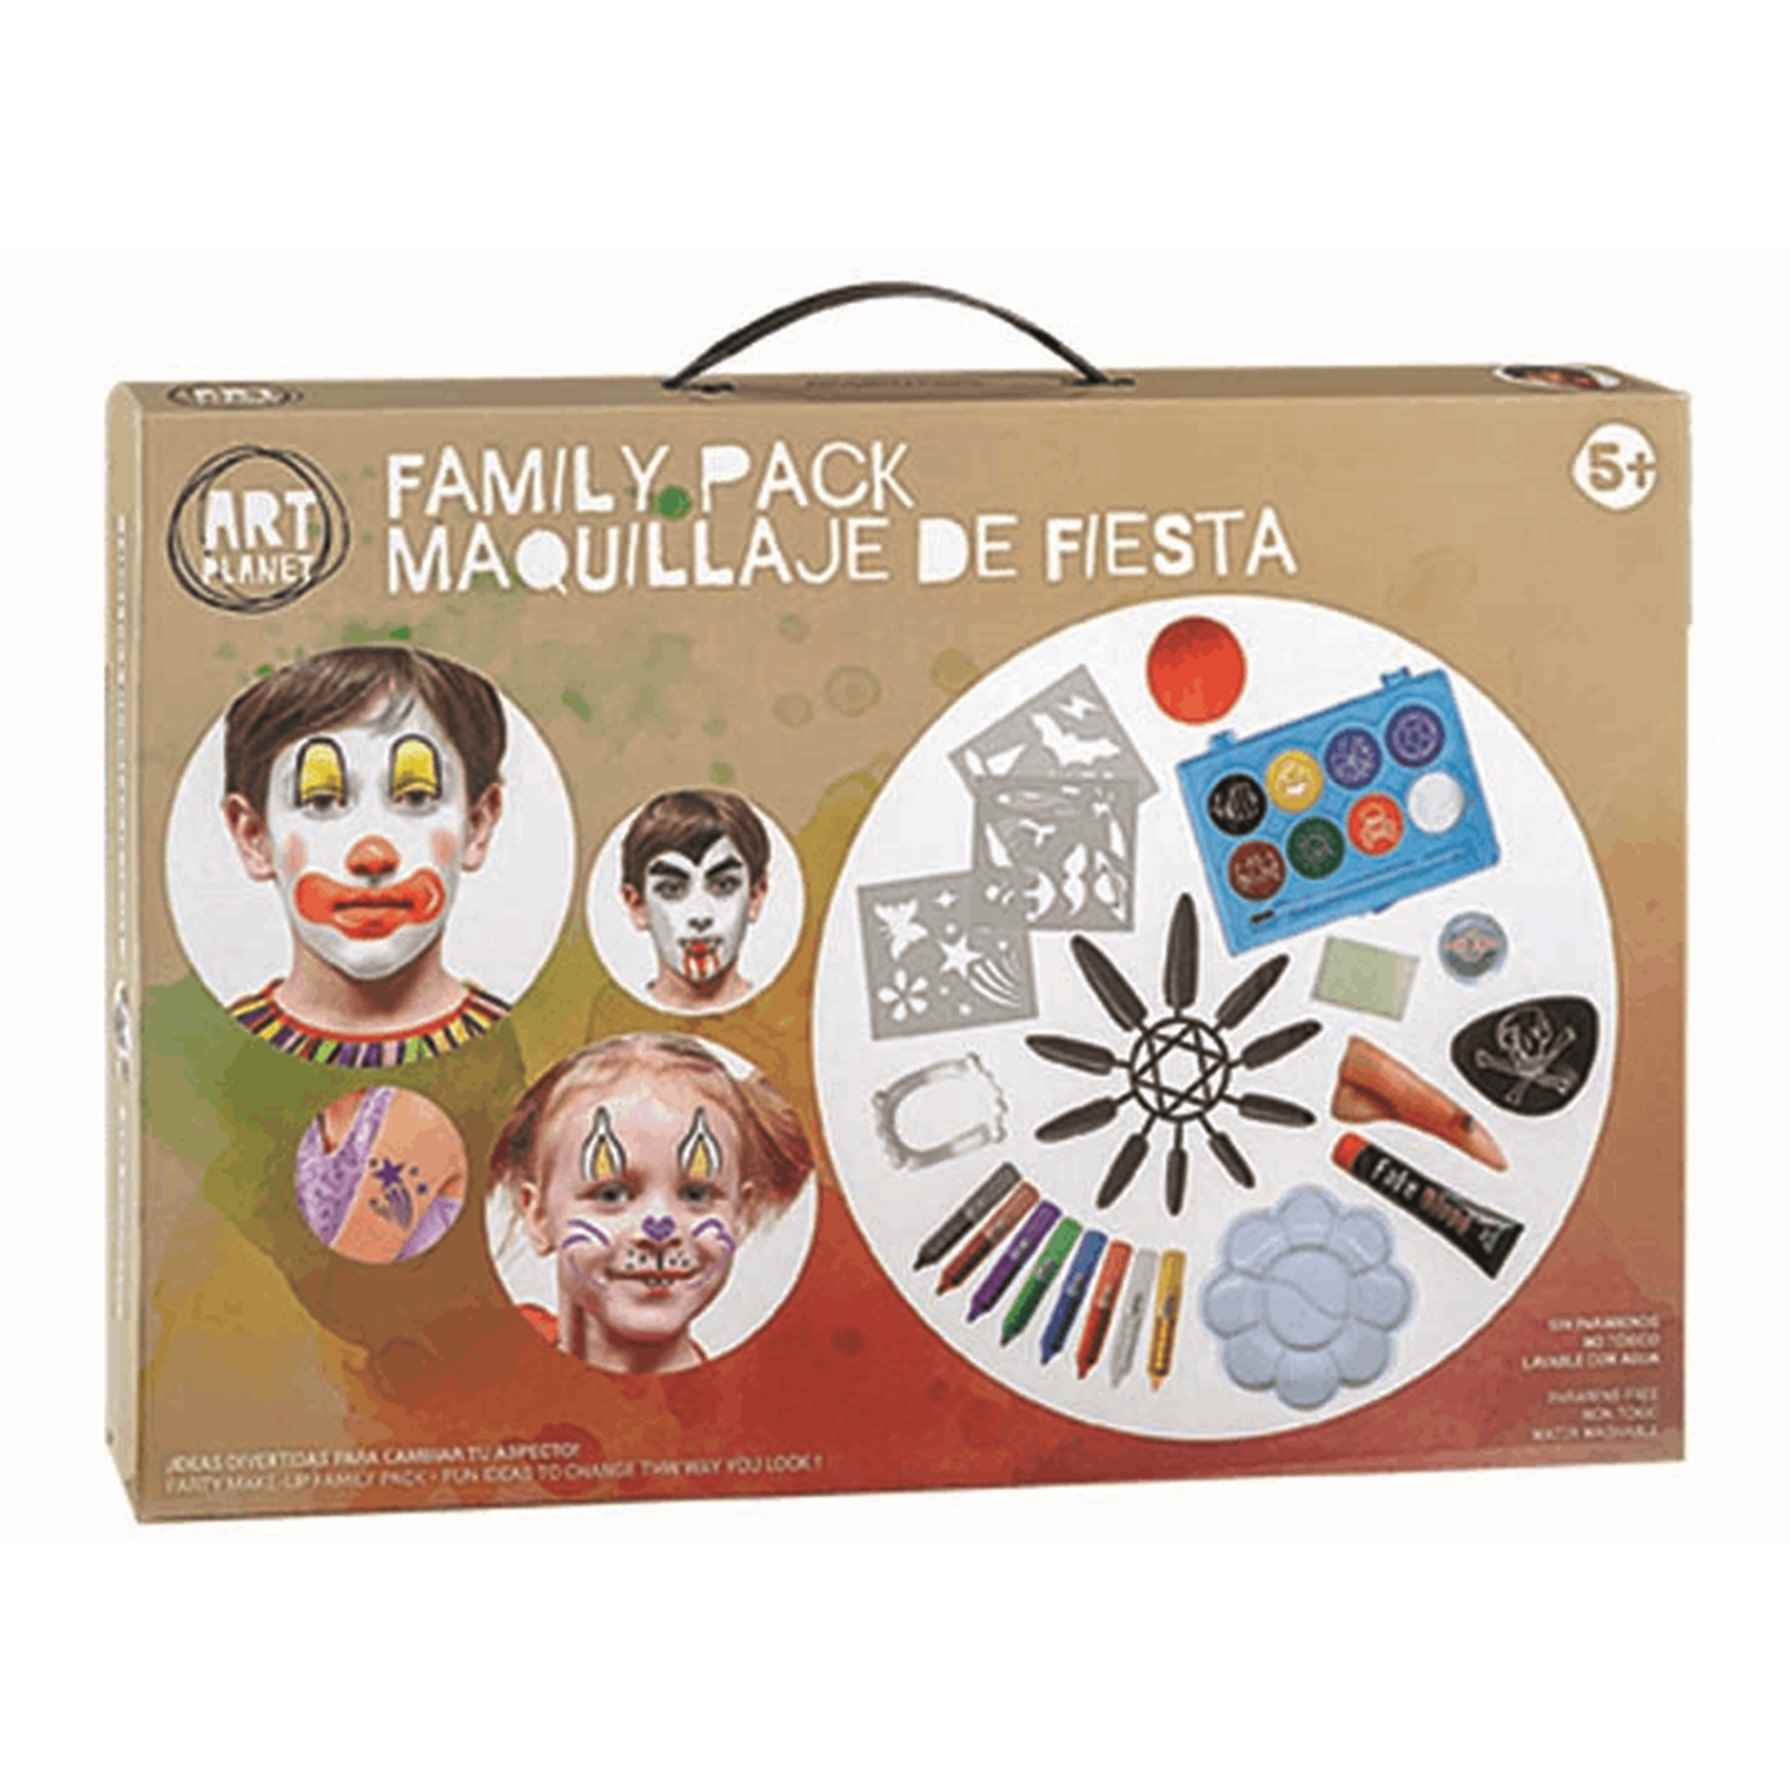 Family Pack Maquillaje de Fiesta